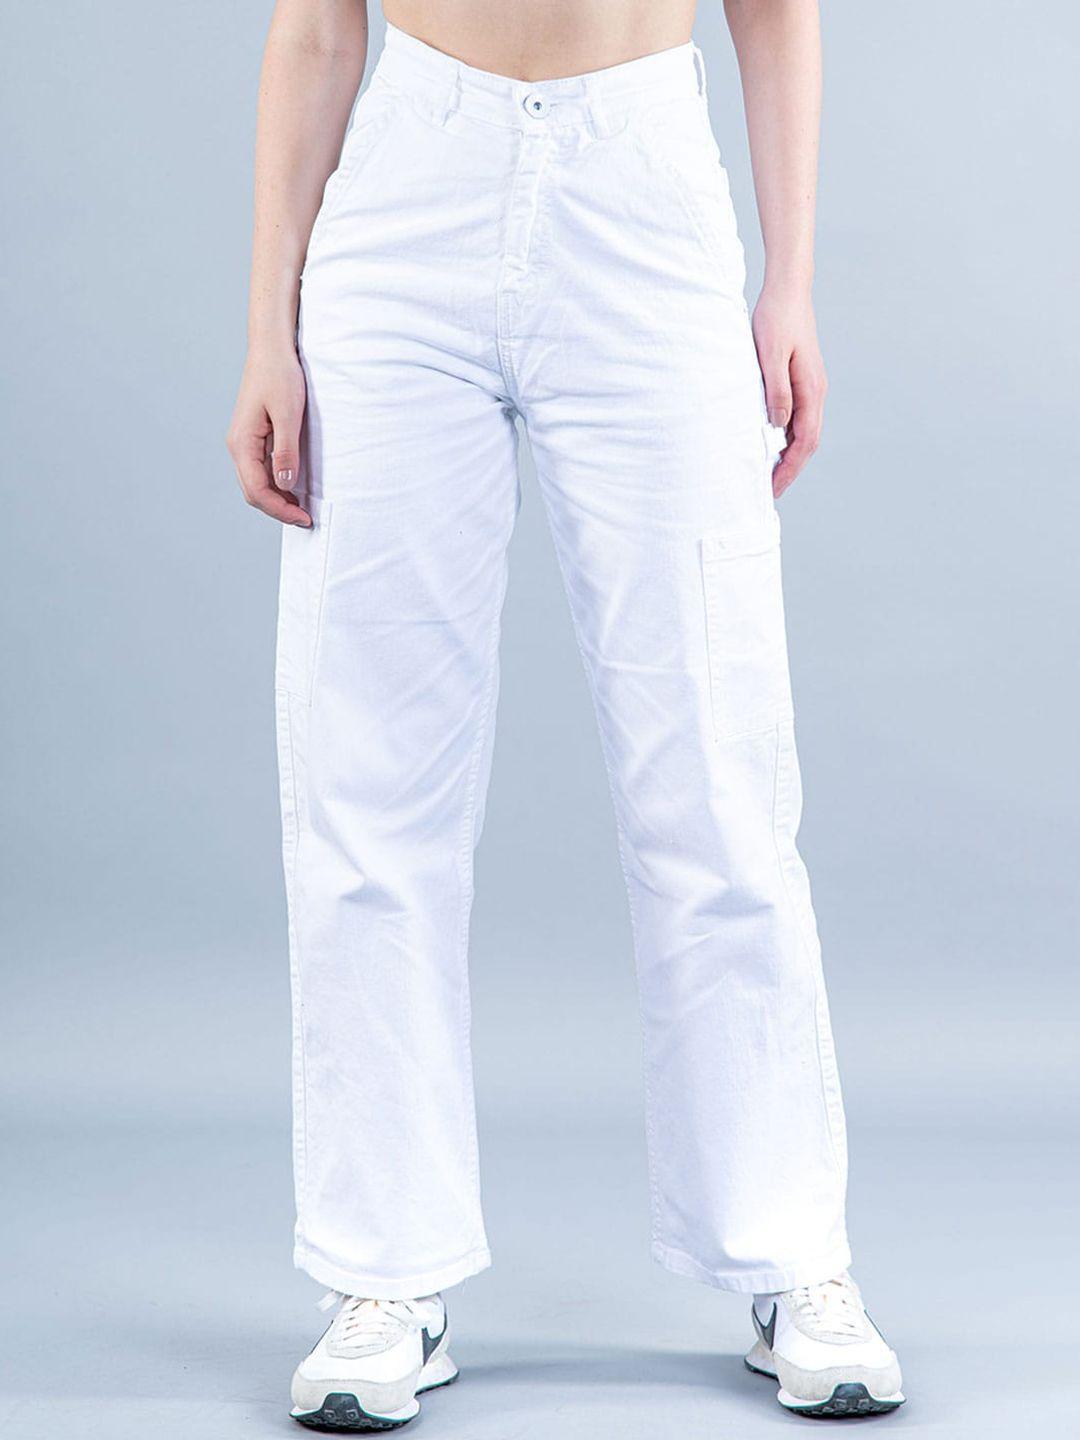 Tistabene Women Comfort Clean Look Cotton Jeans